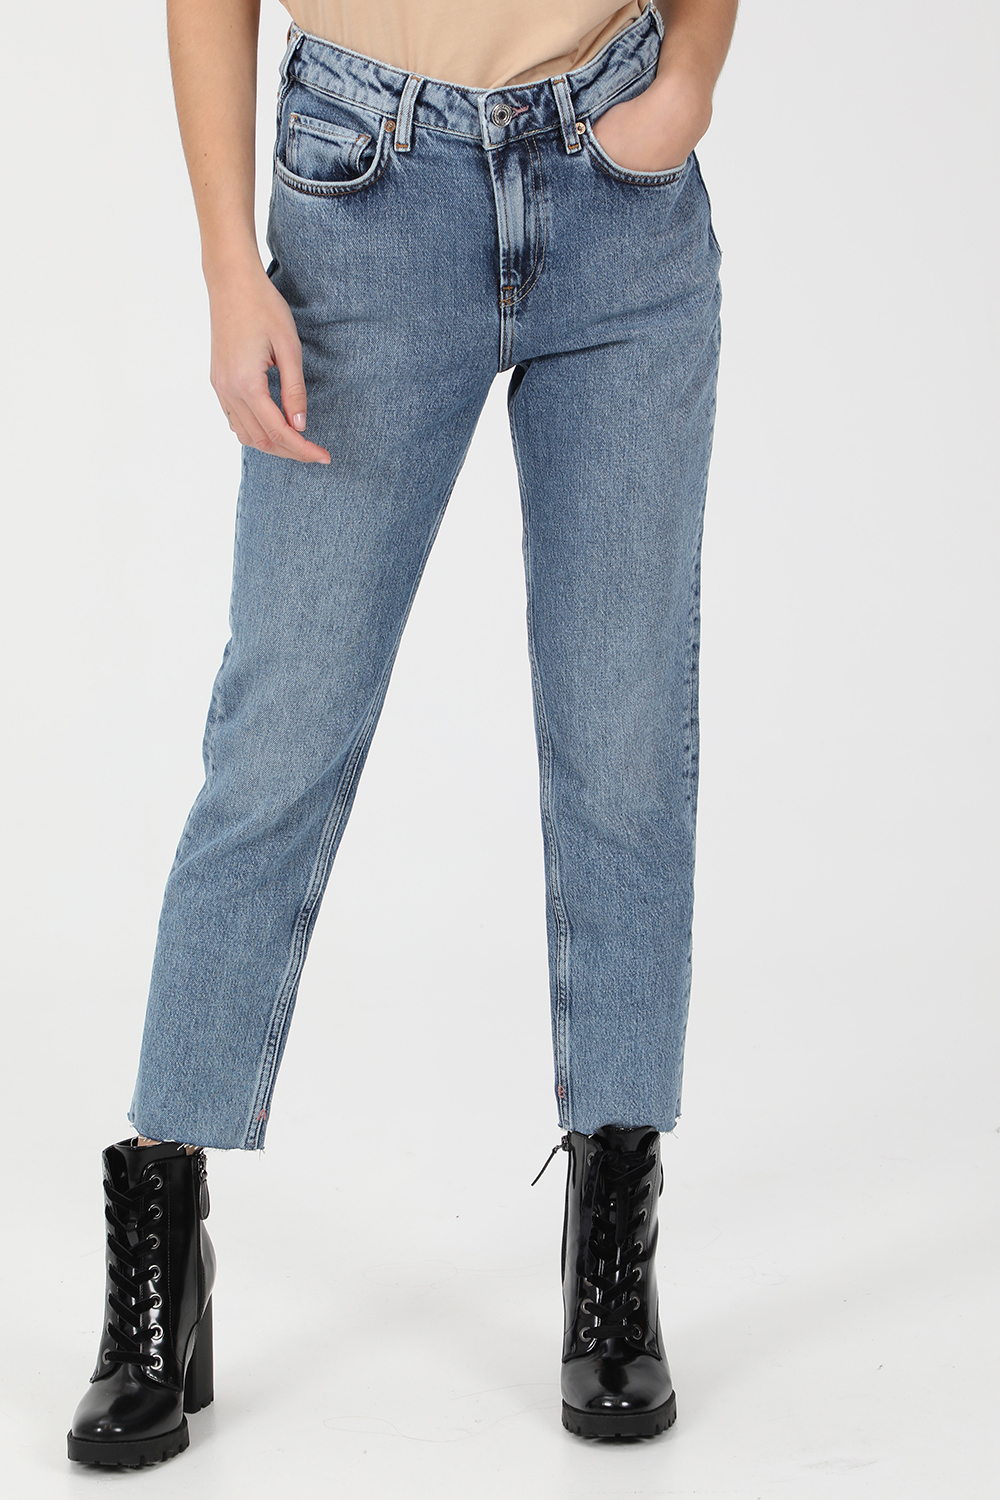 SCOTCH & SODA – Γυναικειο jean παντελονι SCOTCH & SODA 5 pocket high rise slim fit μπλε